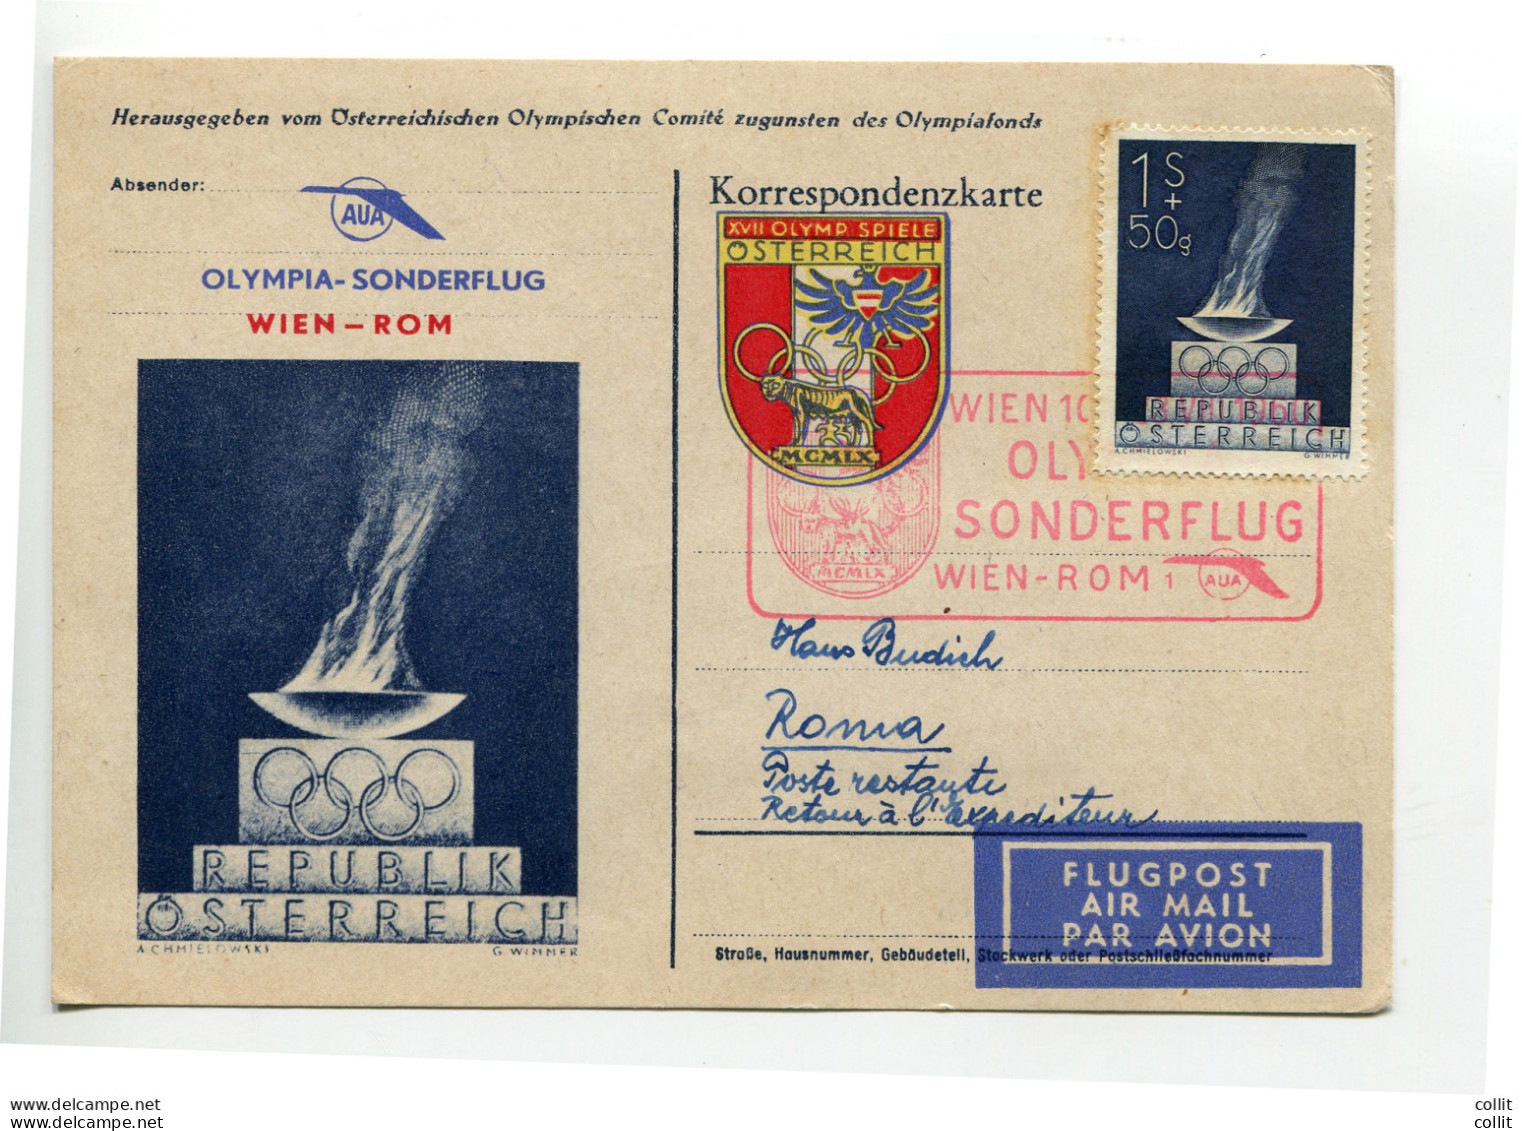 Vienna/Roma 23.8.60 - Cartolina Soprastampata Inoltrata Volo Olimpico AUA - Airmail